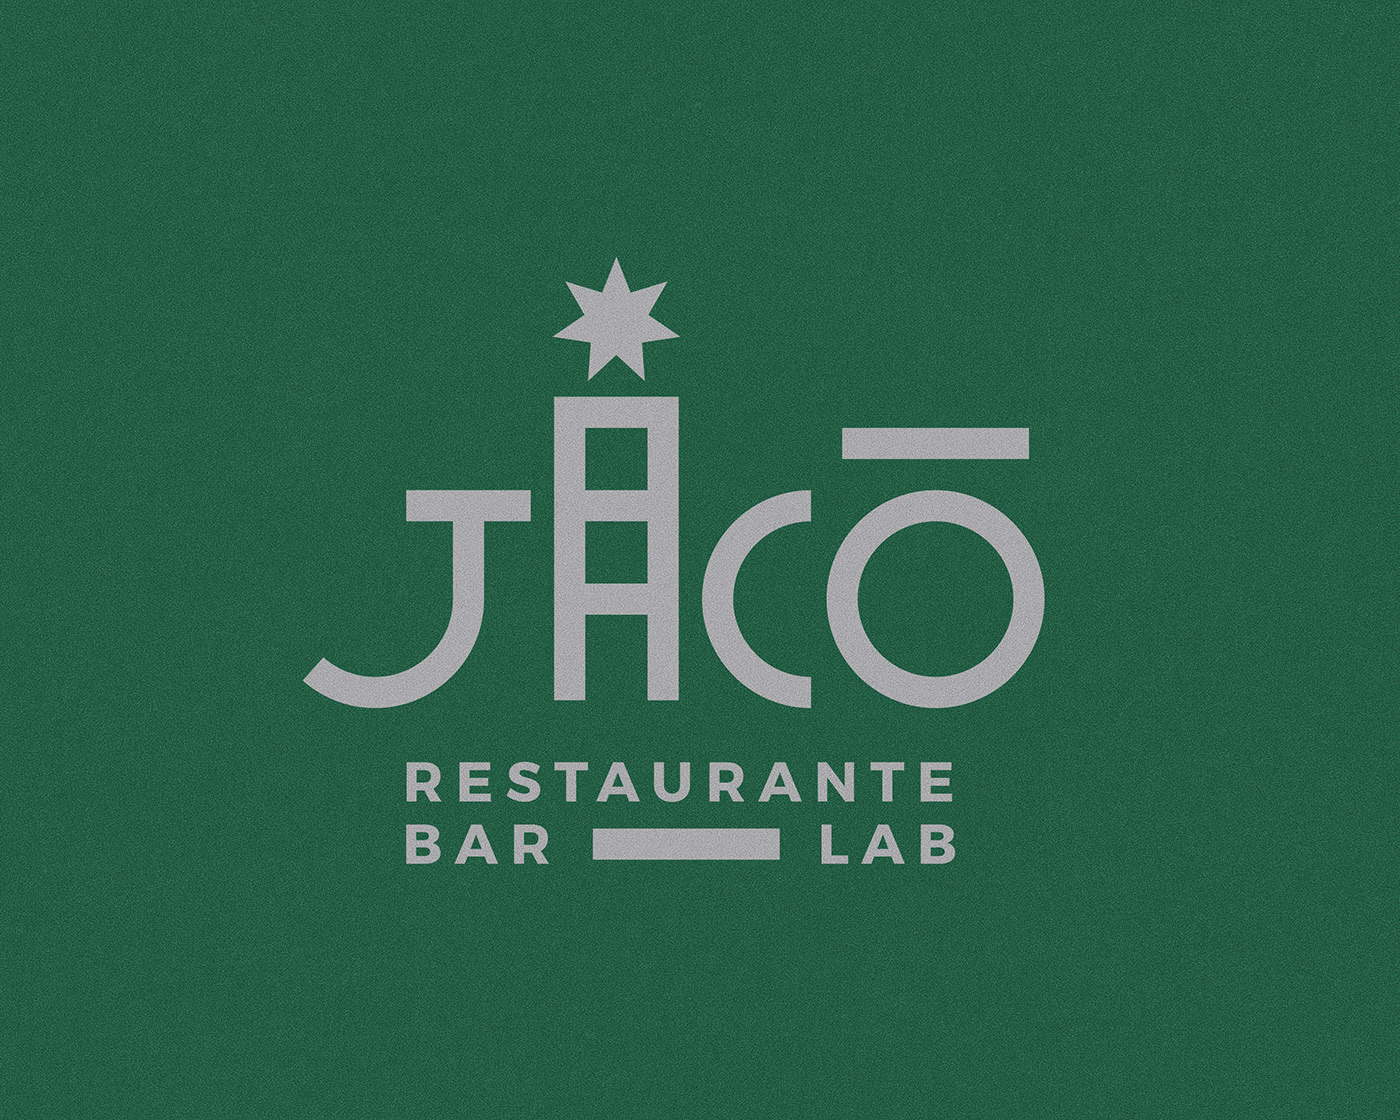 jacob restaurant gastronomy Culinary laboratory stairway heaven bar pub